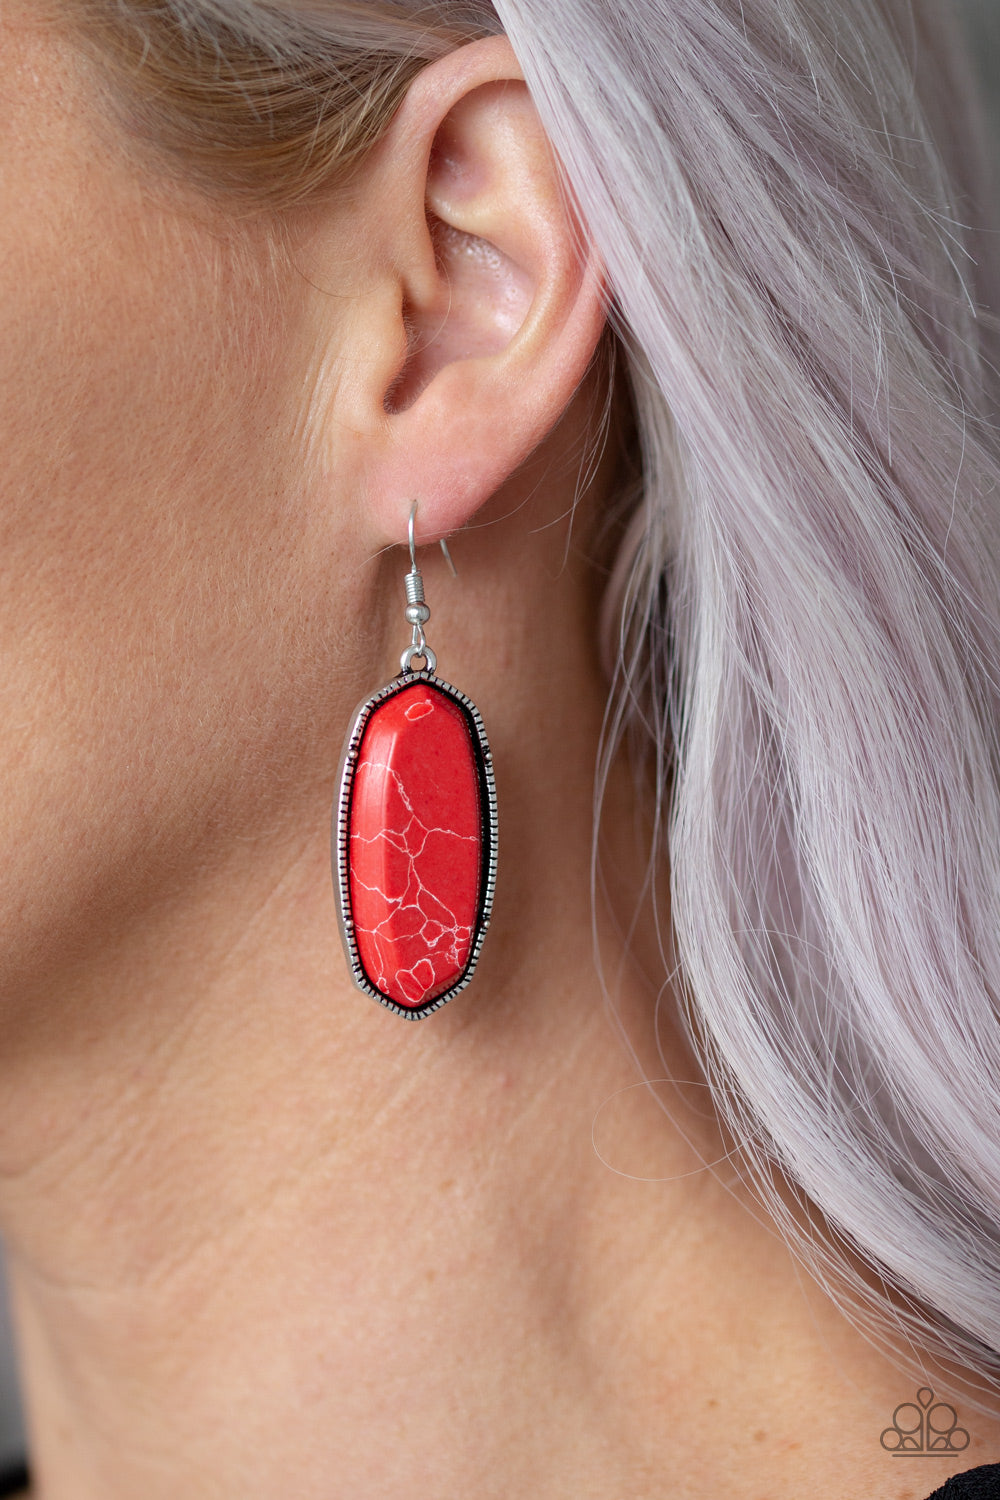 Stone Quest - Red earrings